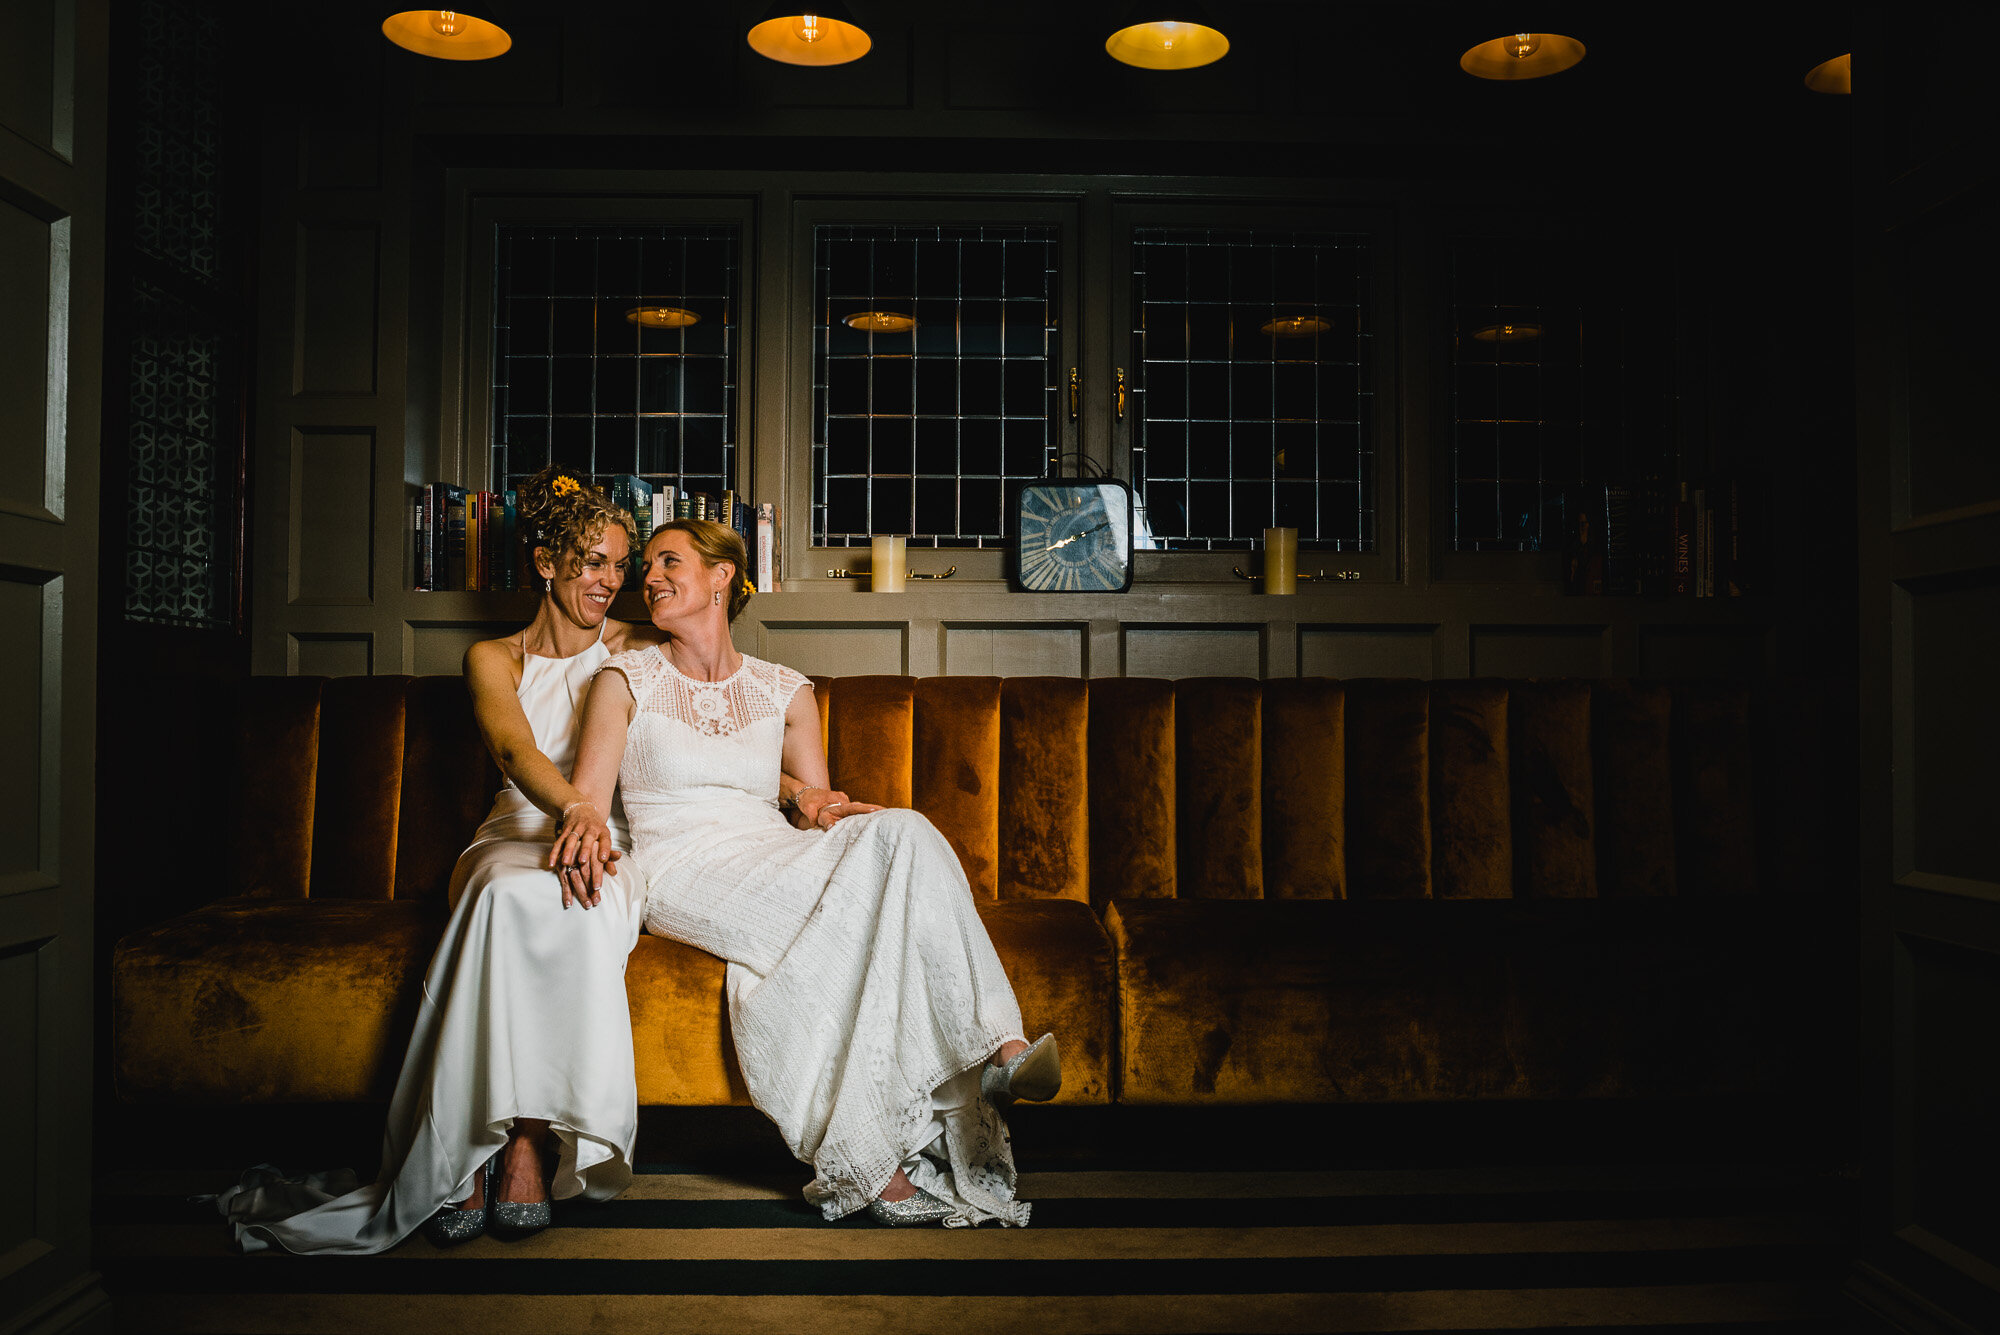 same-sex-wedding-hotel-cromwell-stevenage-hertfordshire-pike-photography-2020.jpg